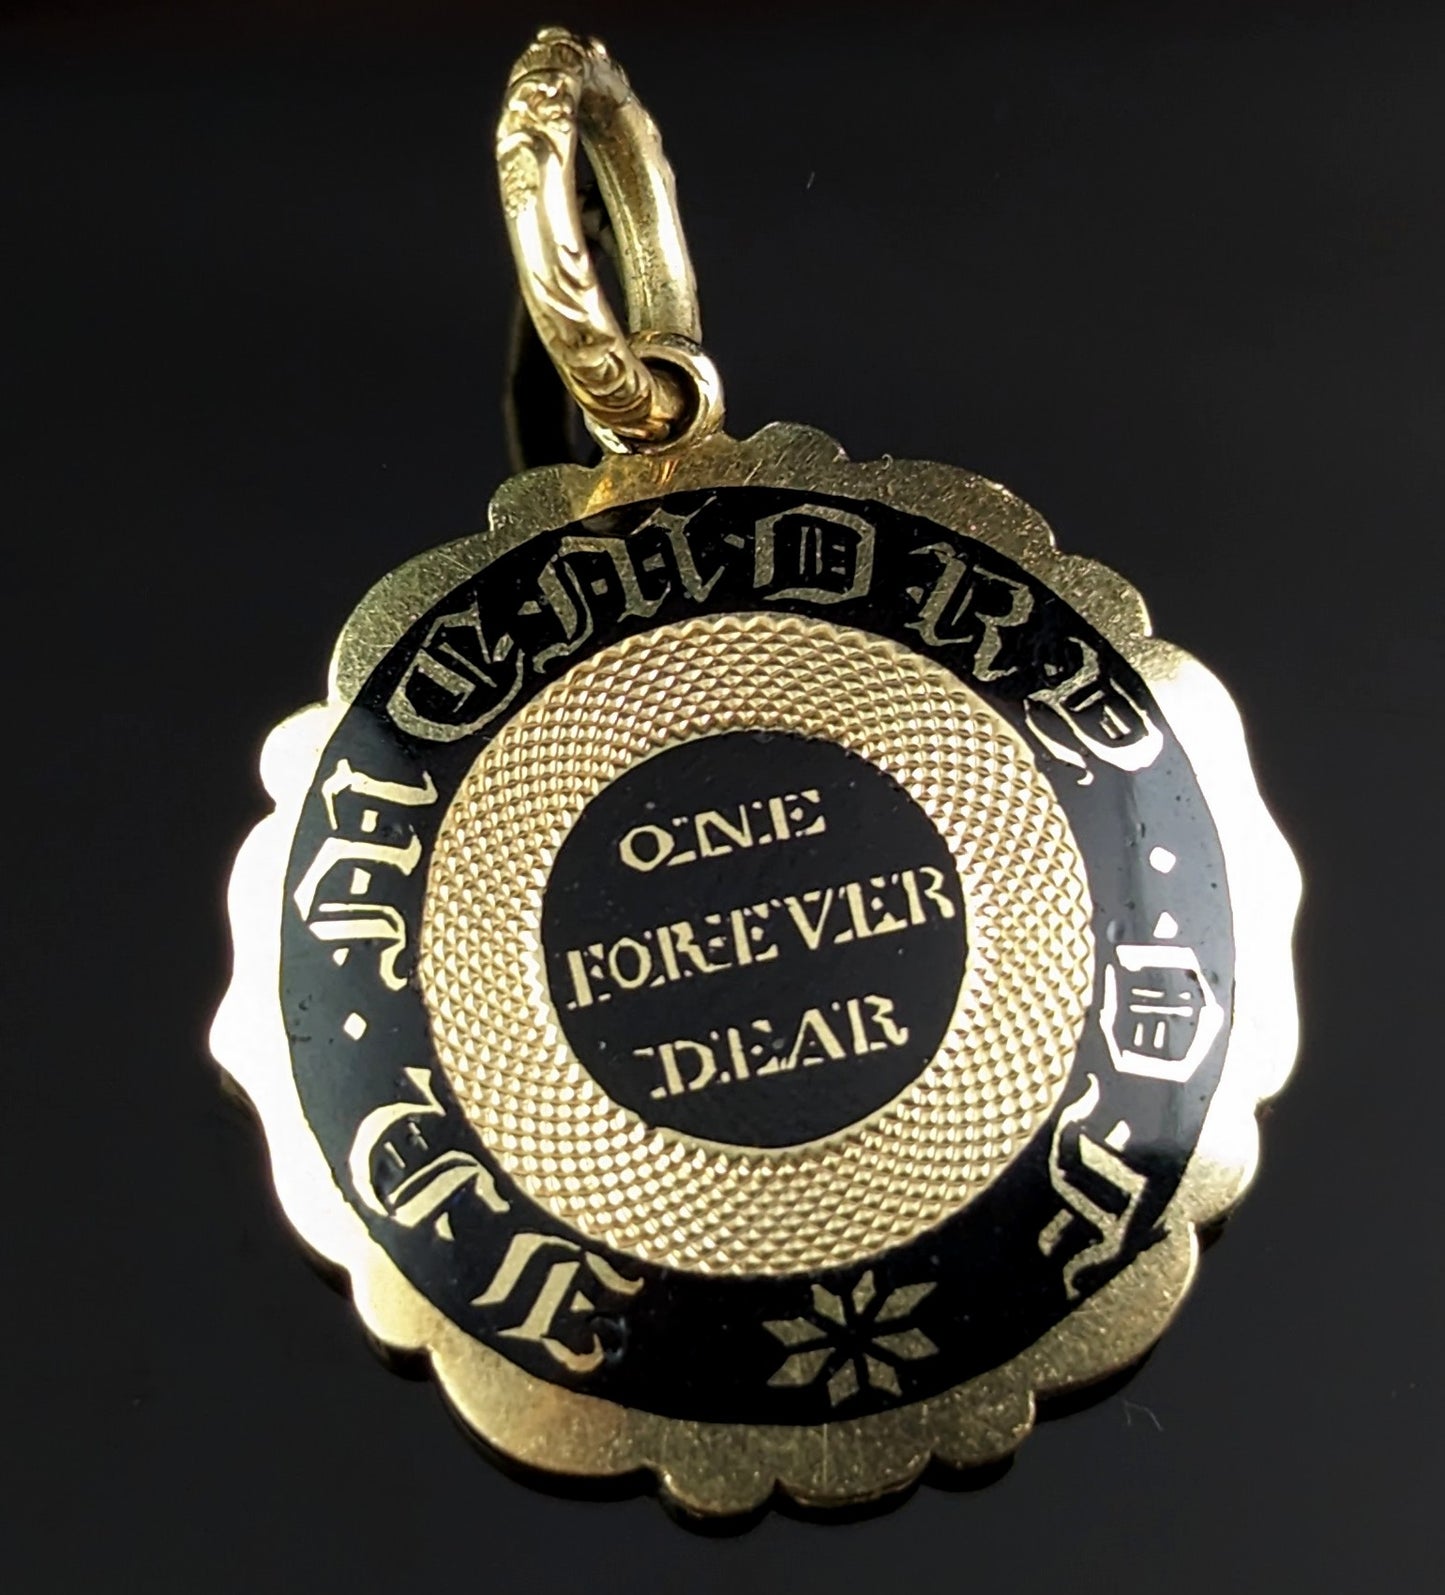 Antique Georgian mourning locket pendant, 9ct gold and black enamel